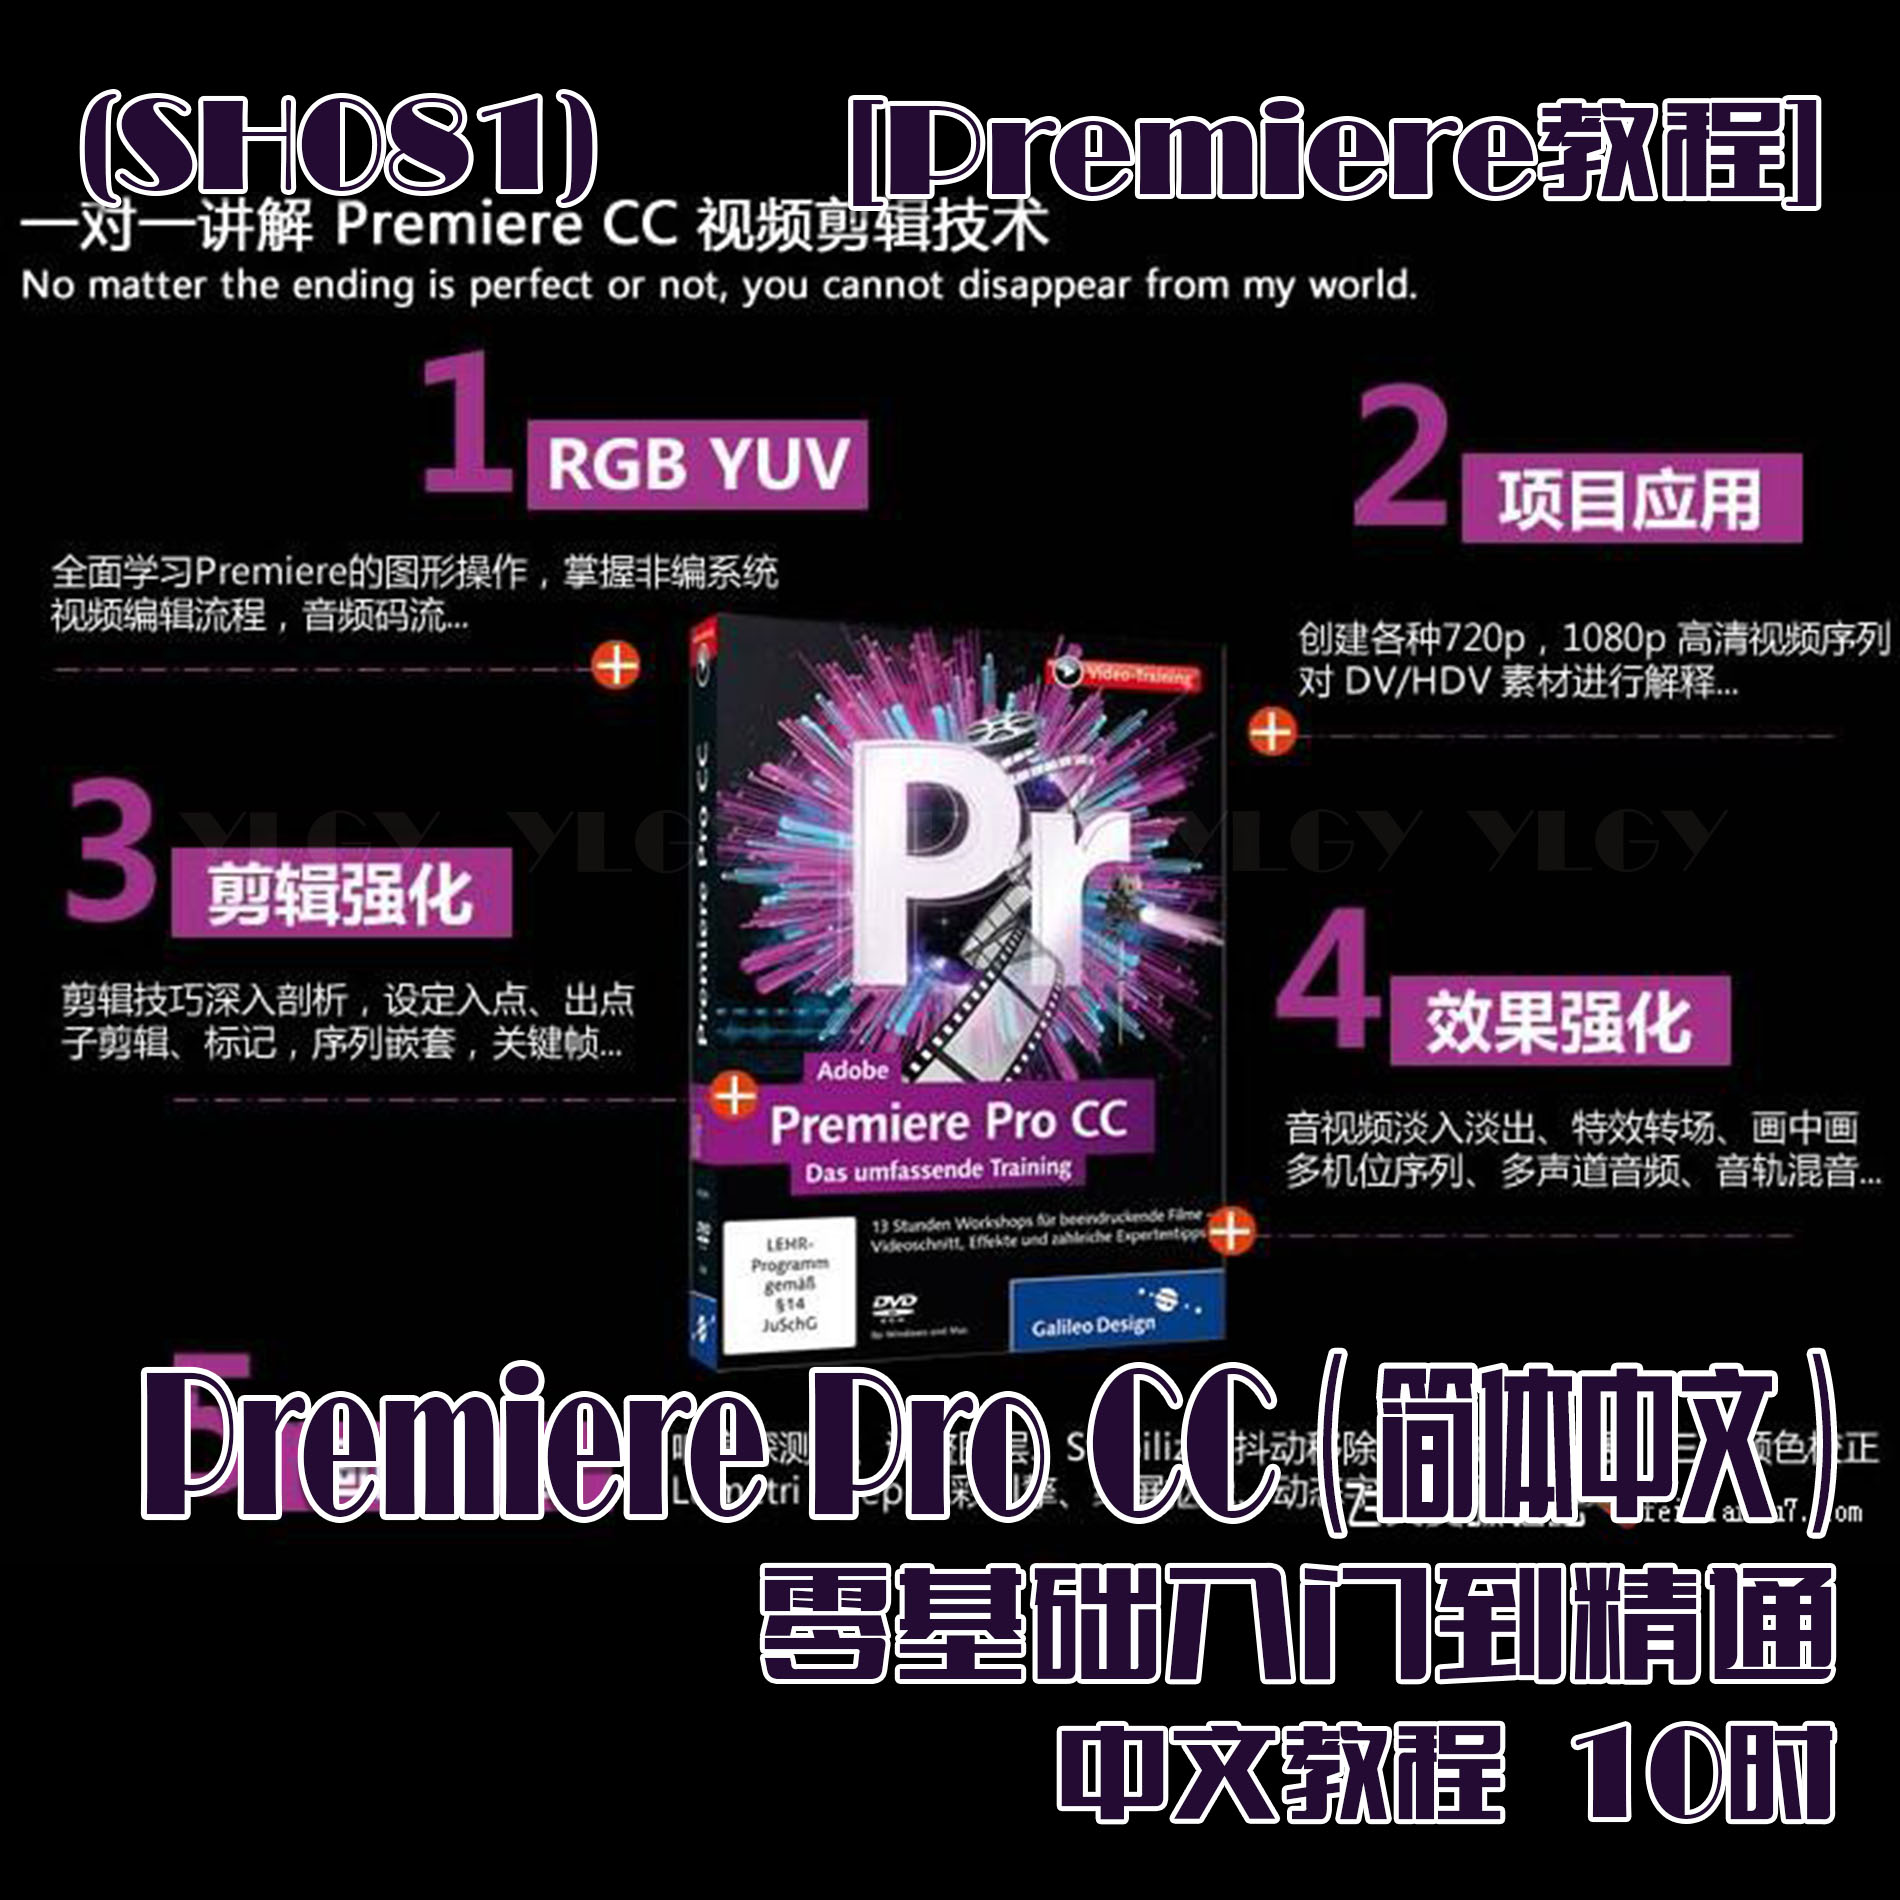 (SH081)Premiere Pro CC(简体中文)零基础入门到精通视频教程中文